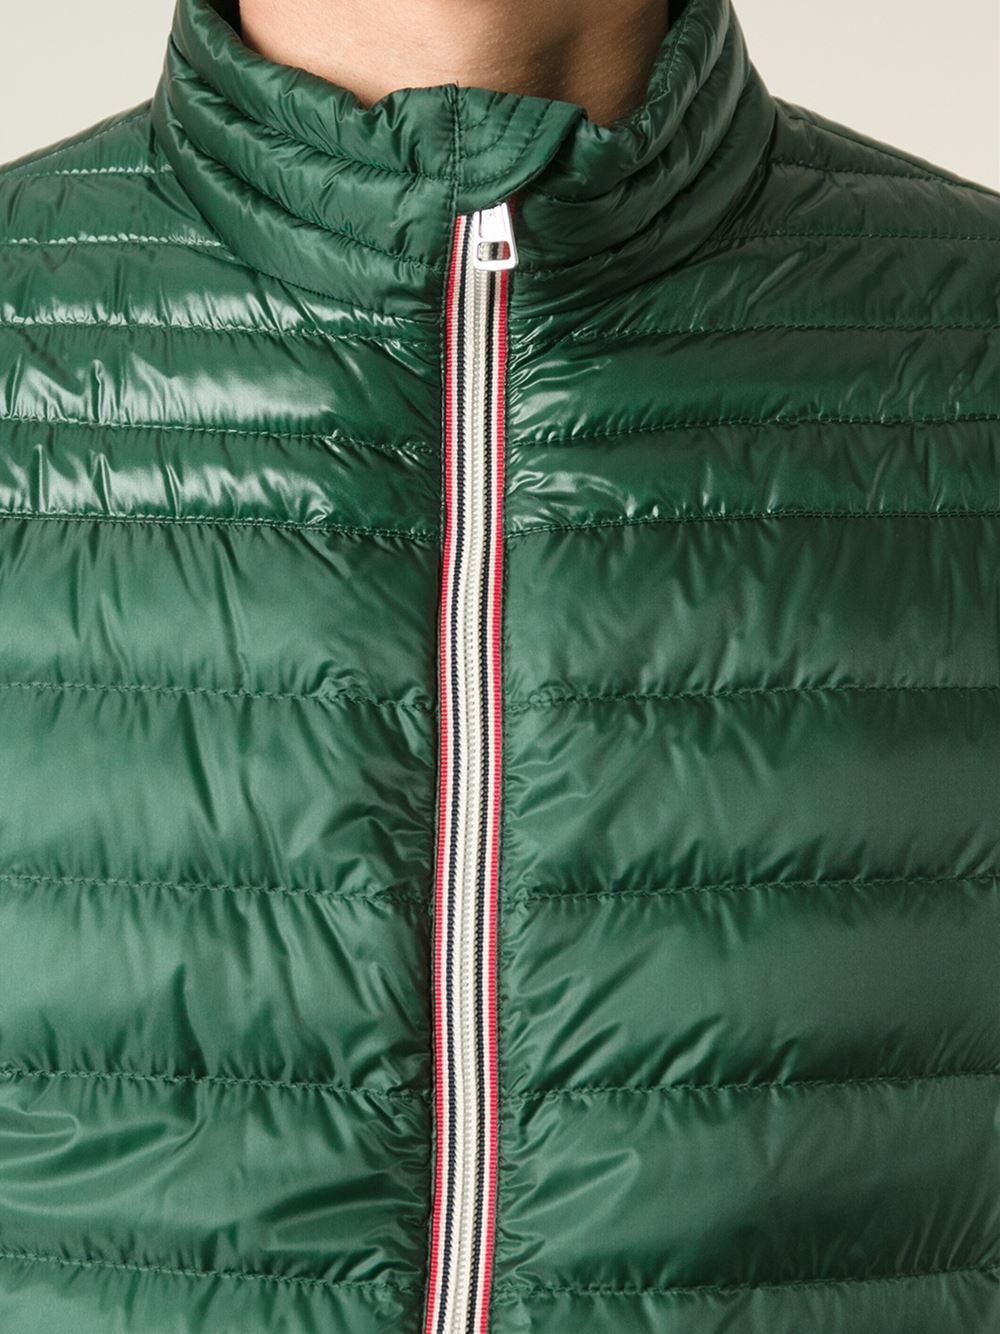 Moncler 'Daniel' Padded Jacket in Green for Men - Lyst